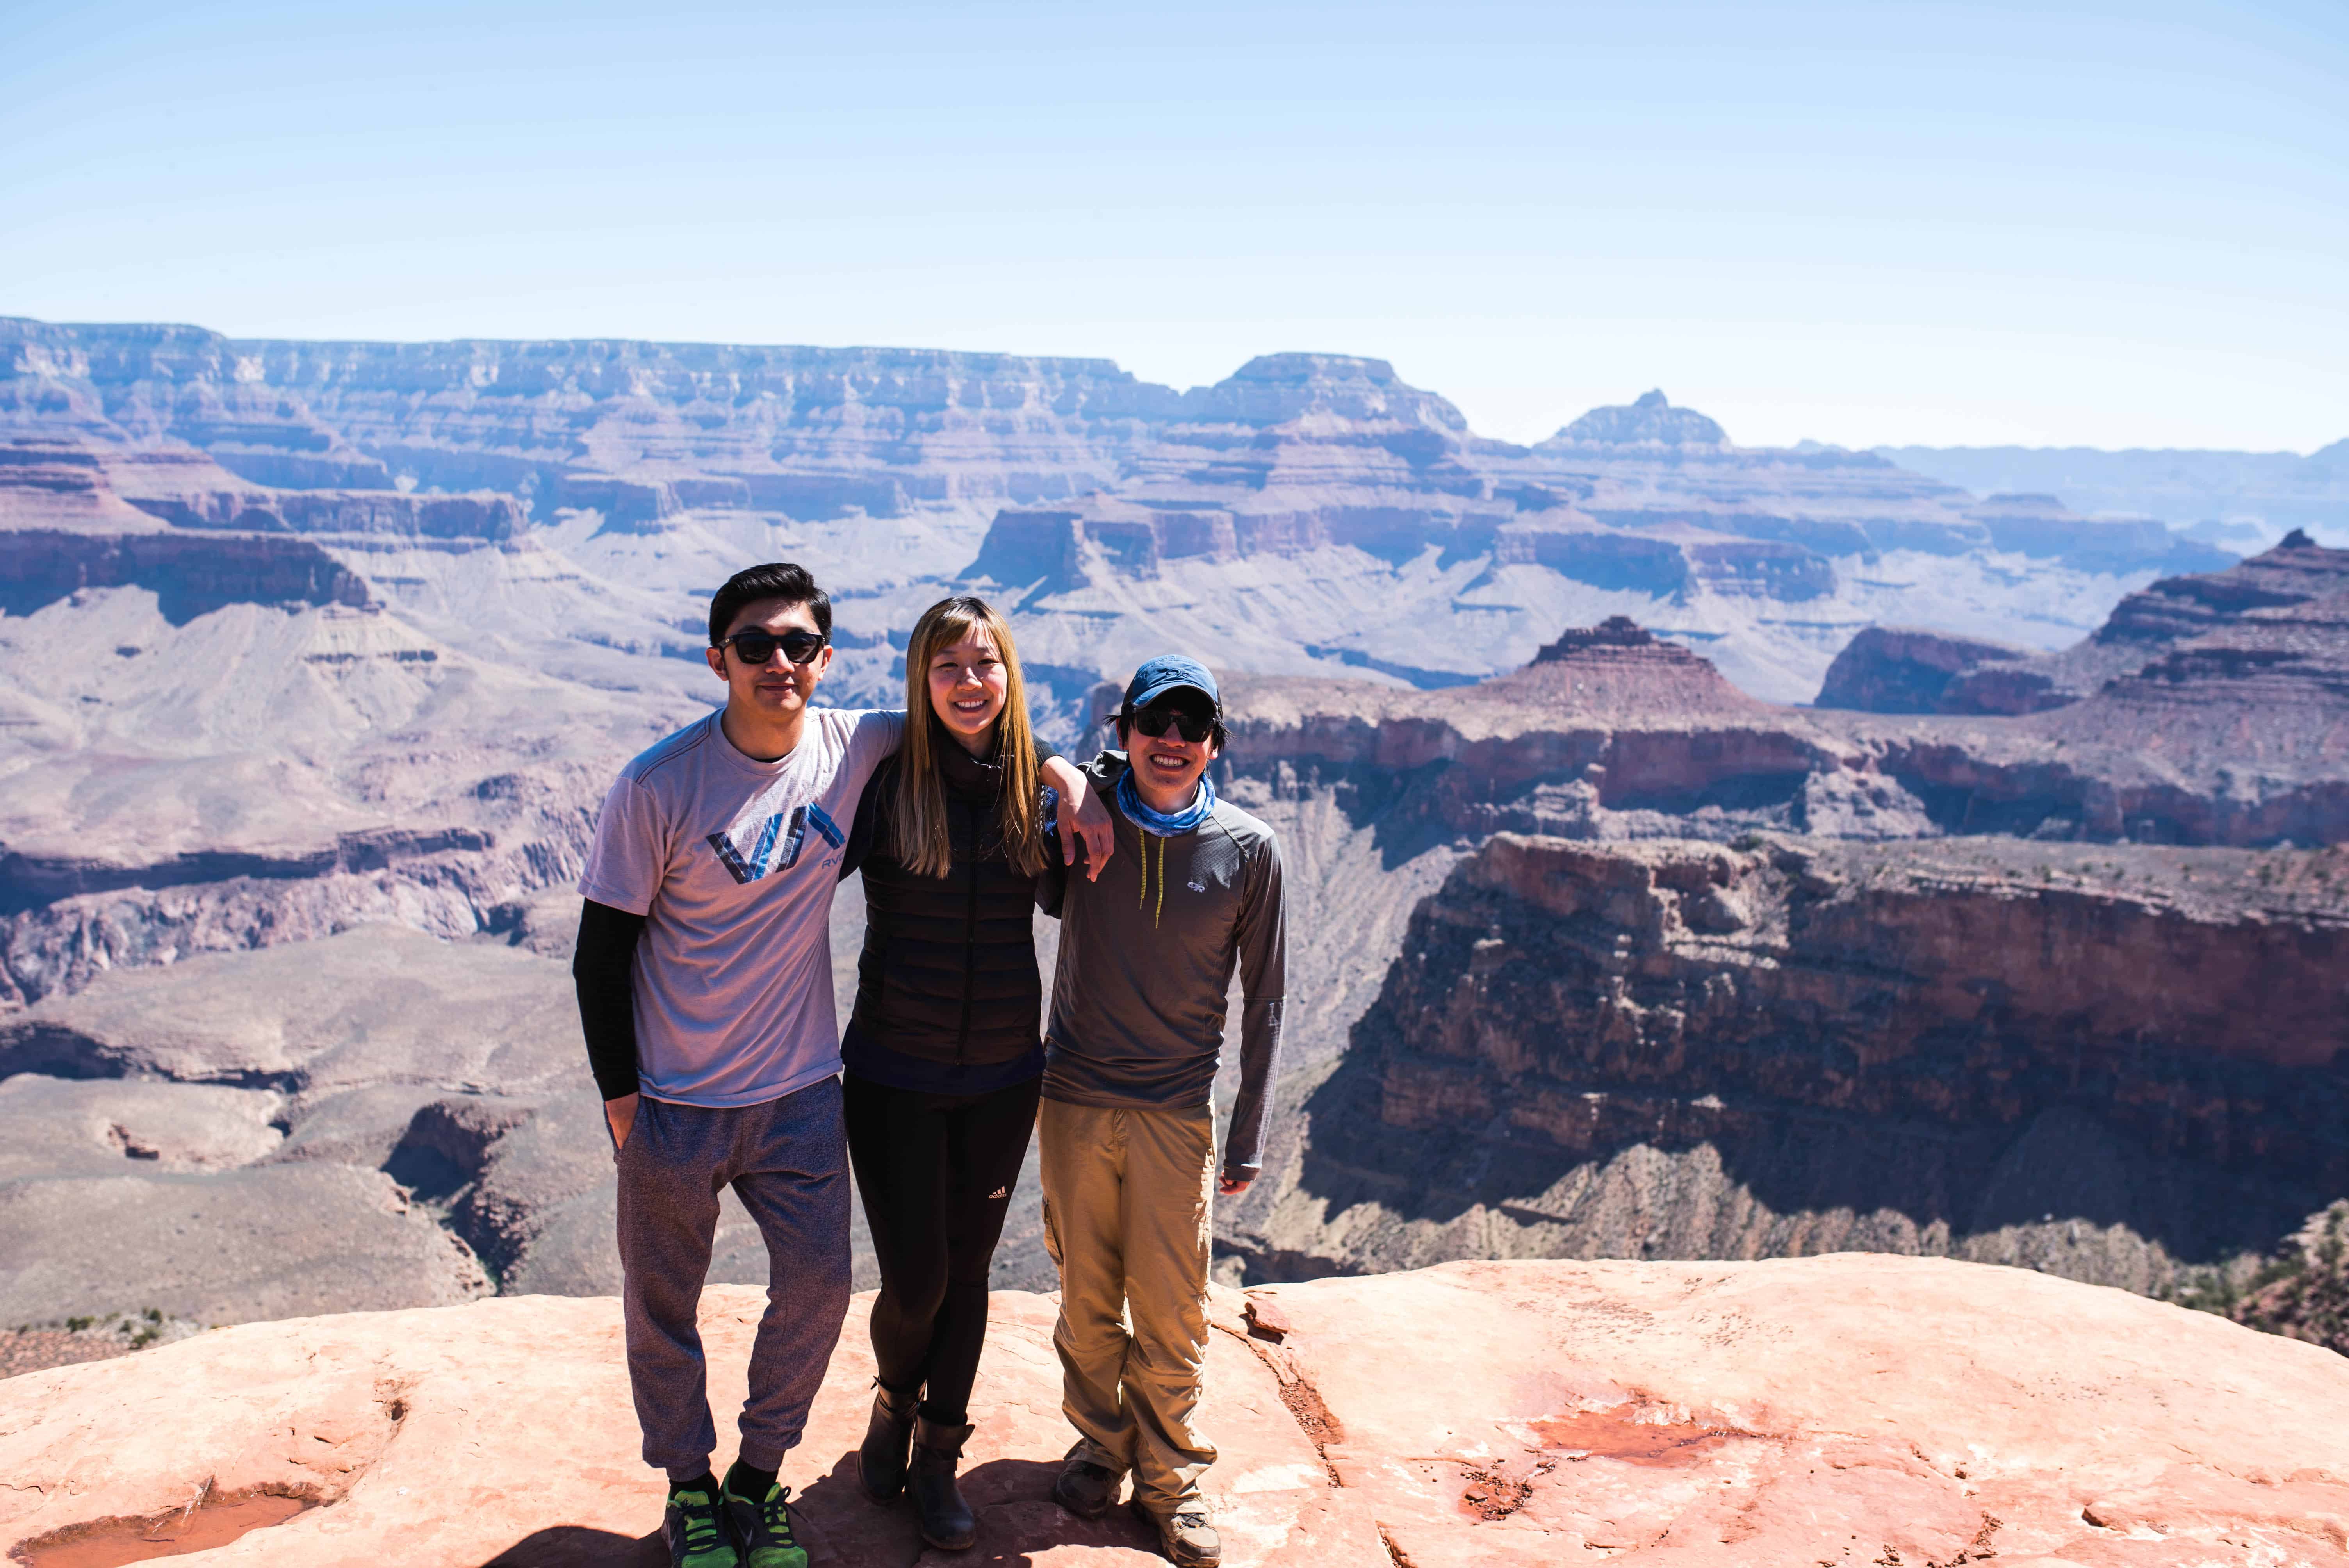 Group photo at the Grand Canyon